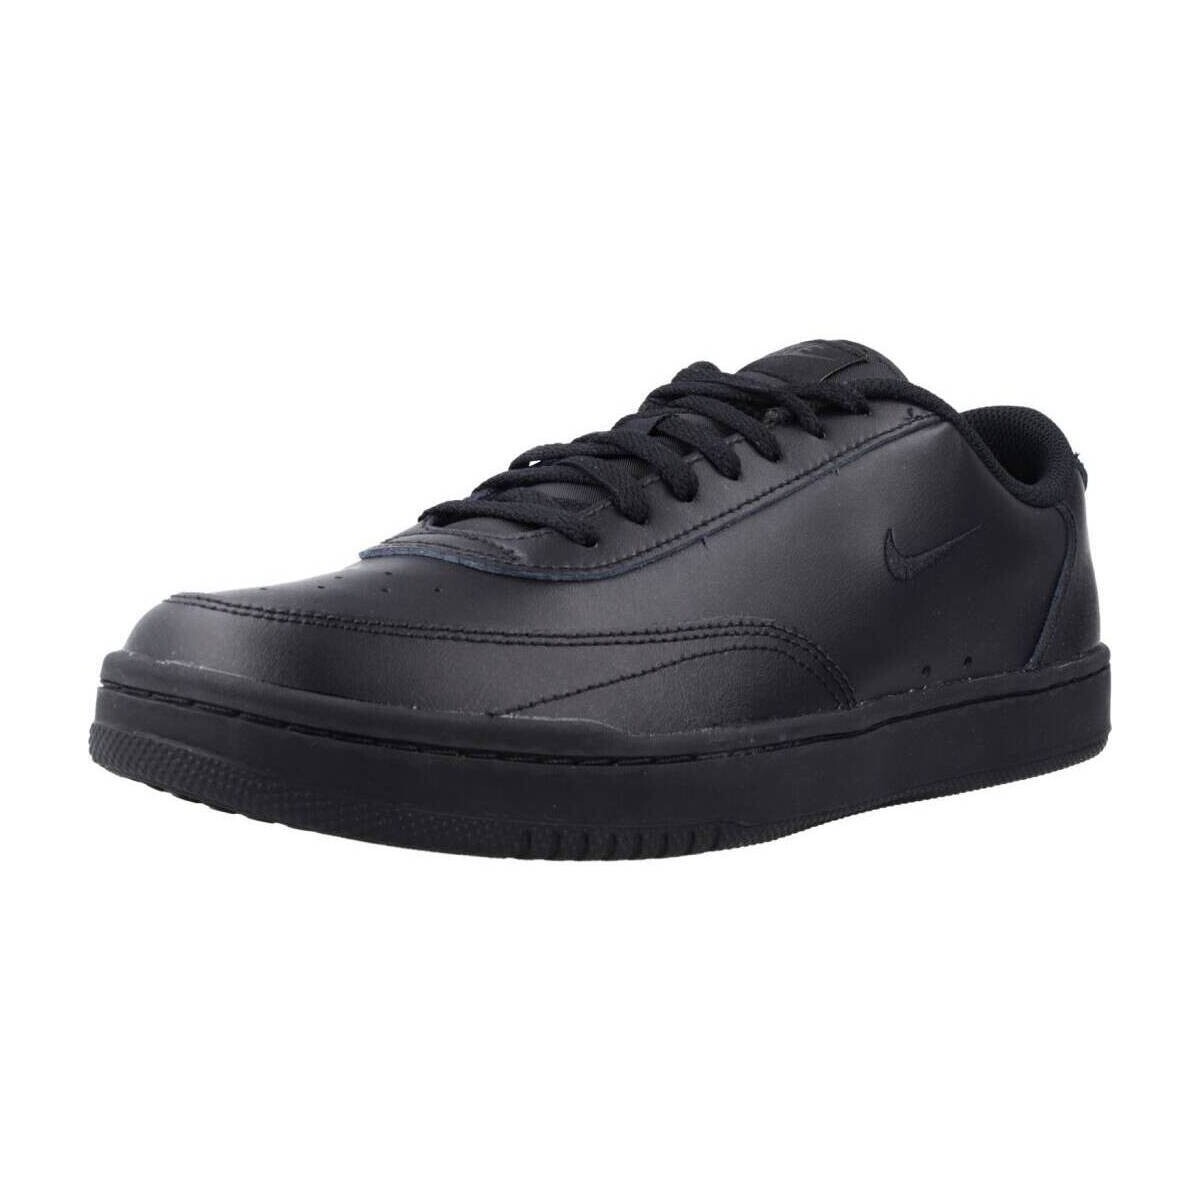 Zapatos Hombre Deportivas Moda Nike COURT VINTAGE Negro